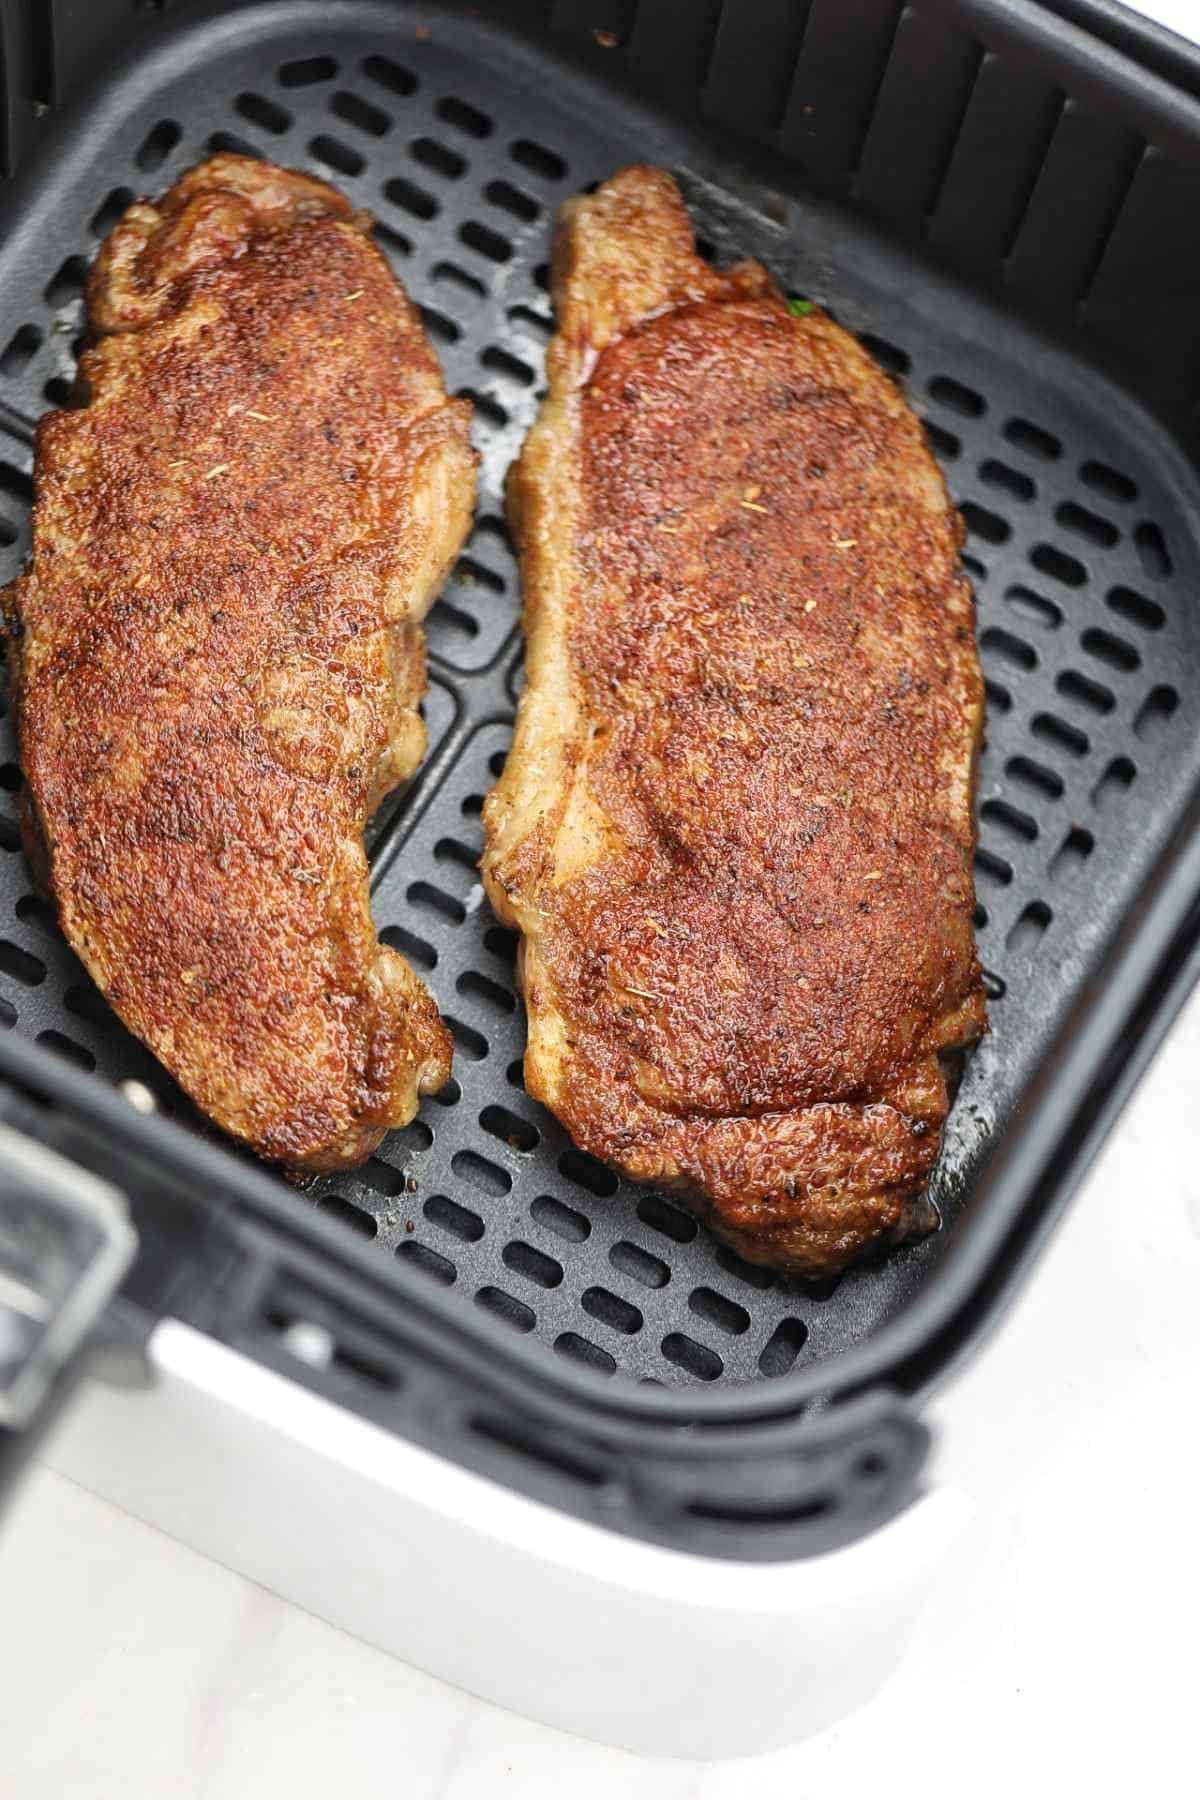 2 cooked sirloin steak in air fryer.